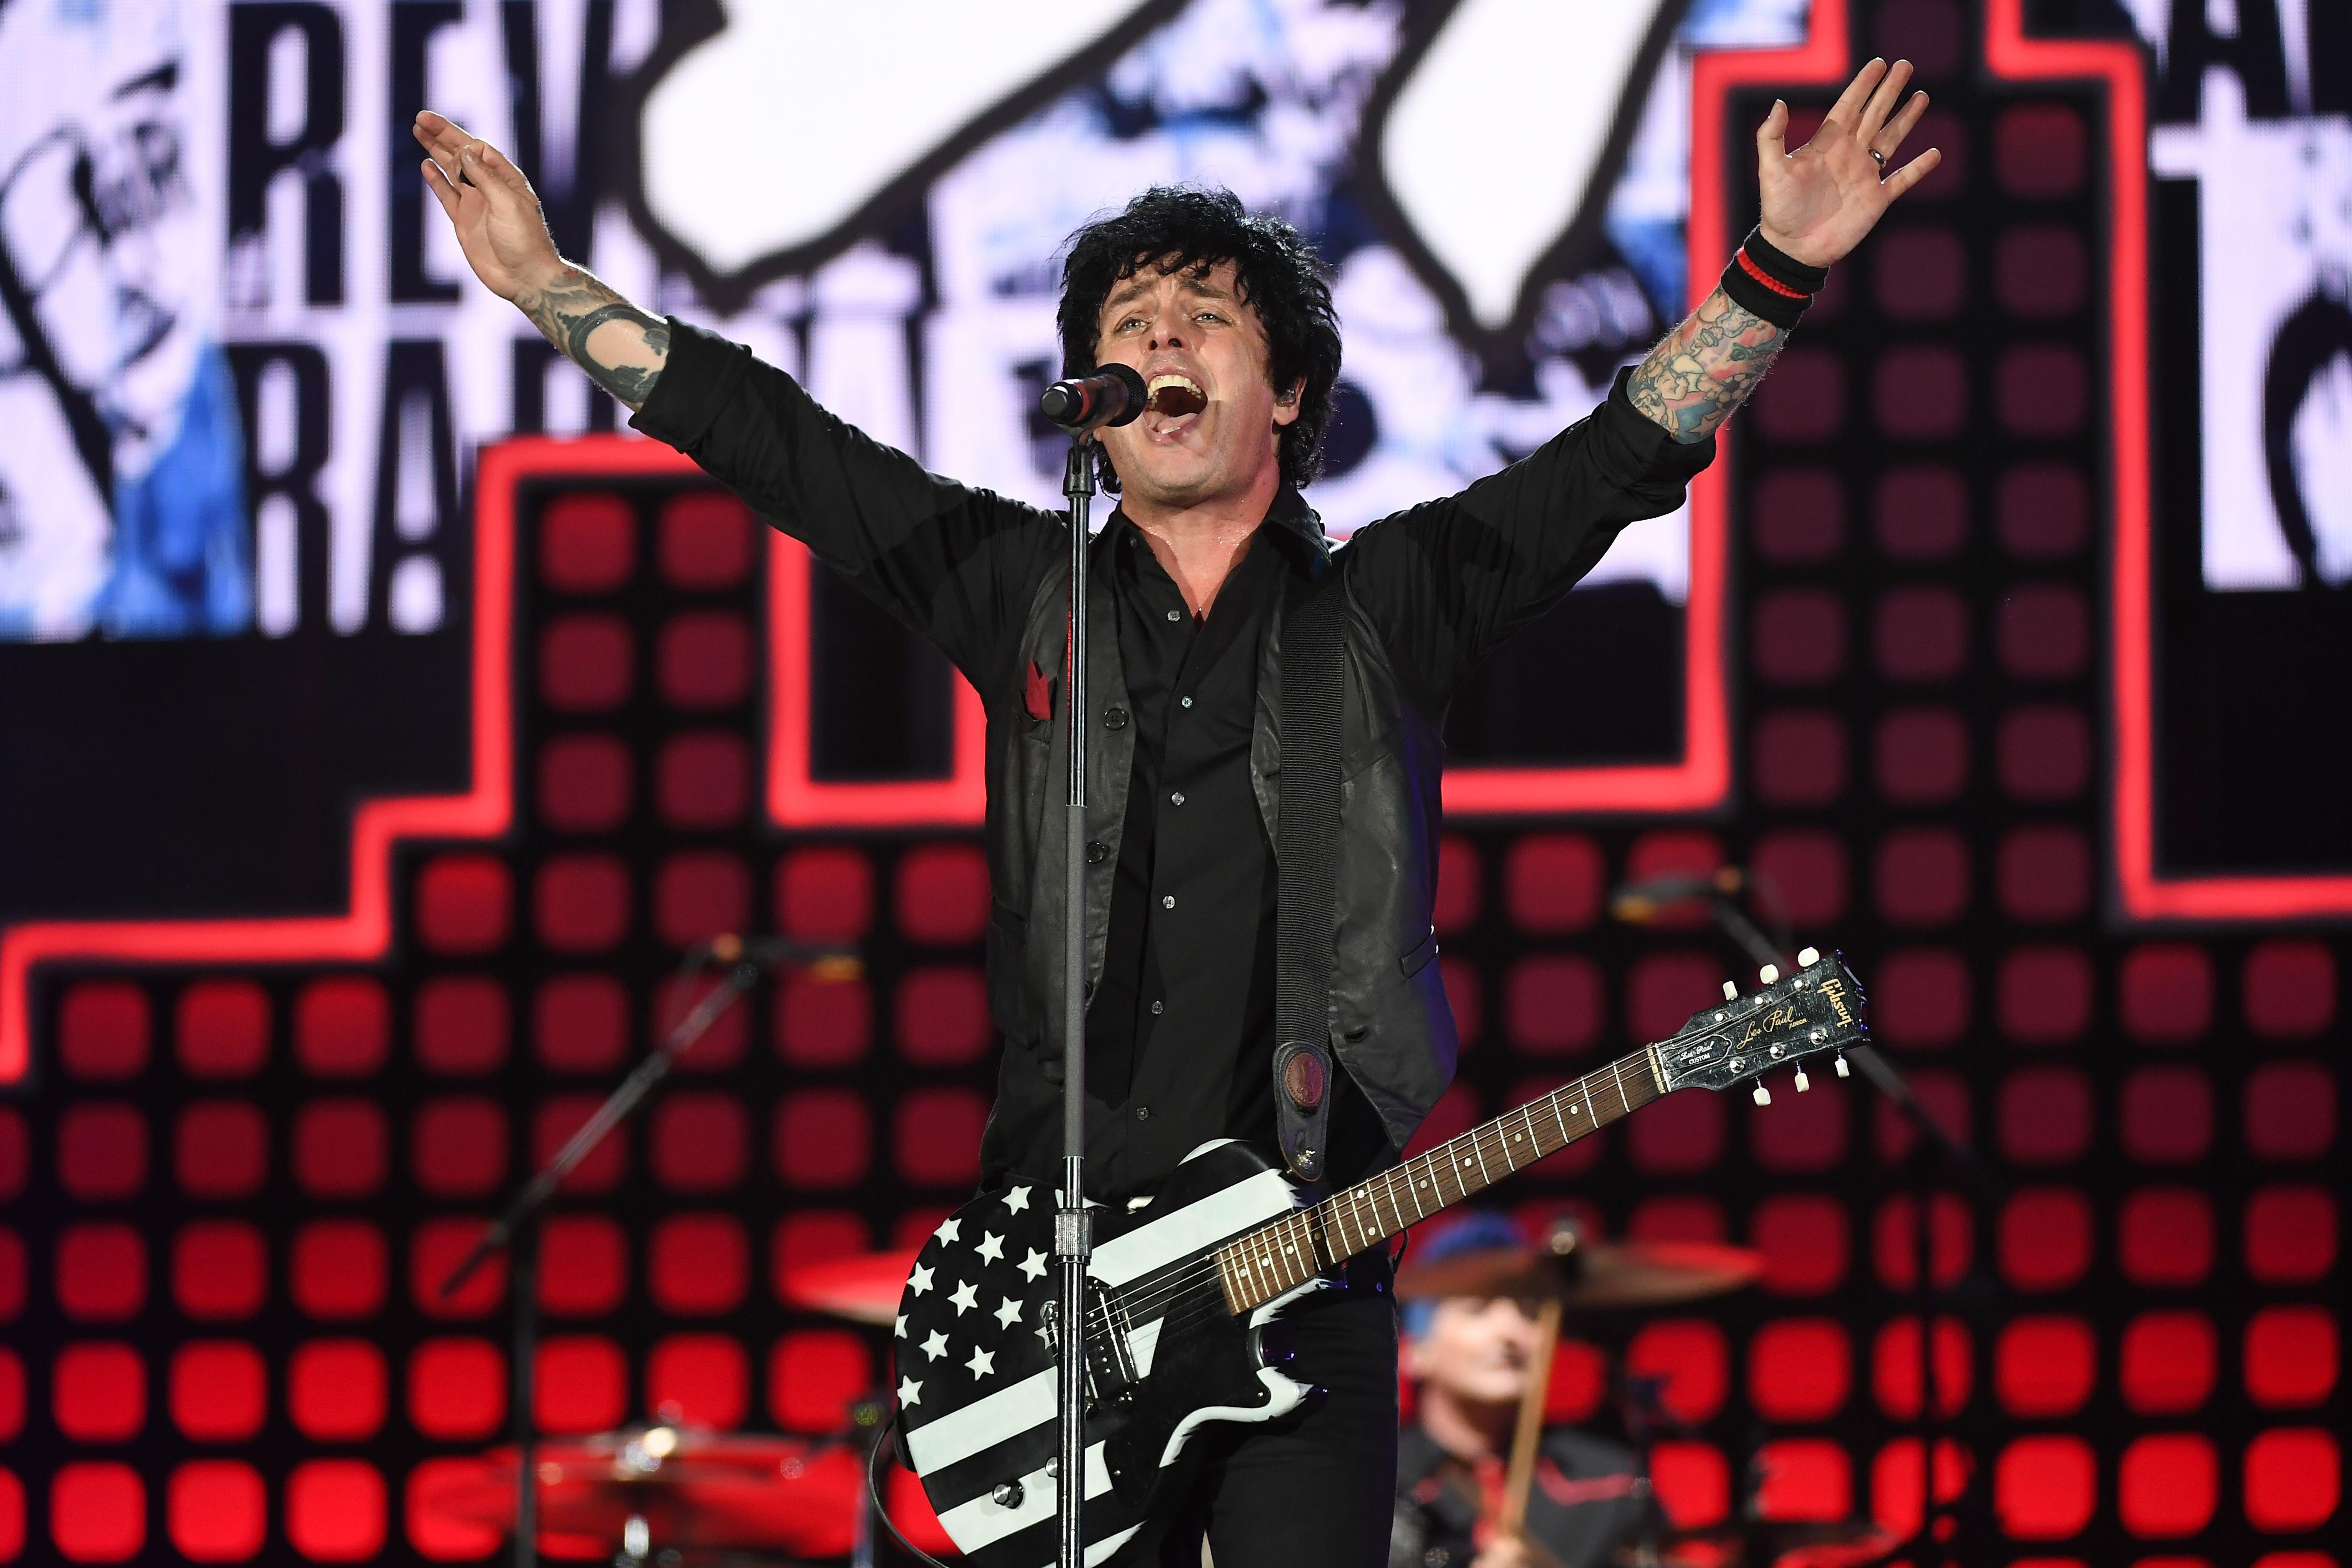 Green Day's Billie joe Armstrong